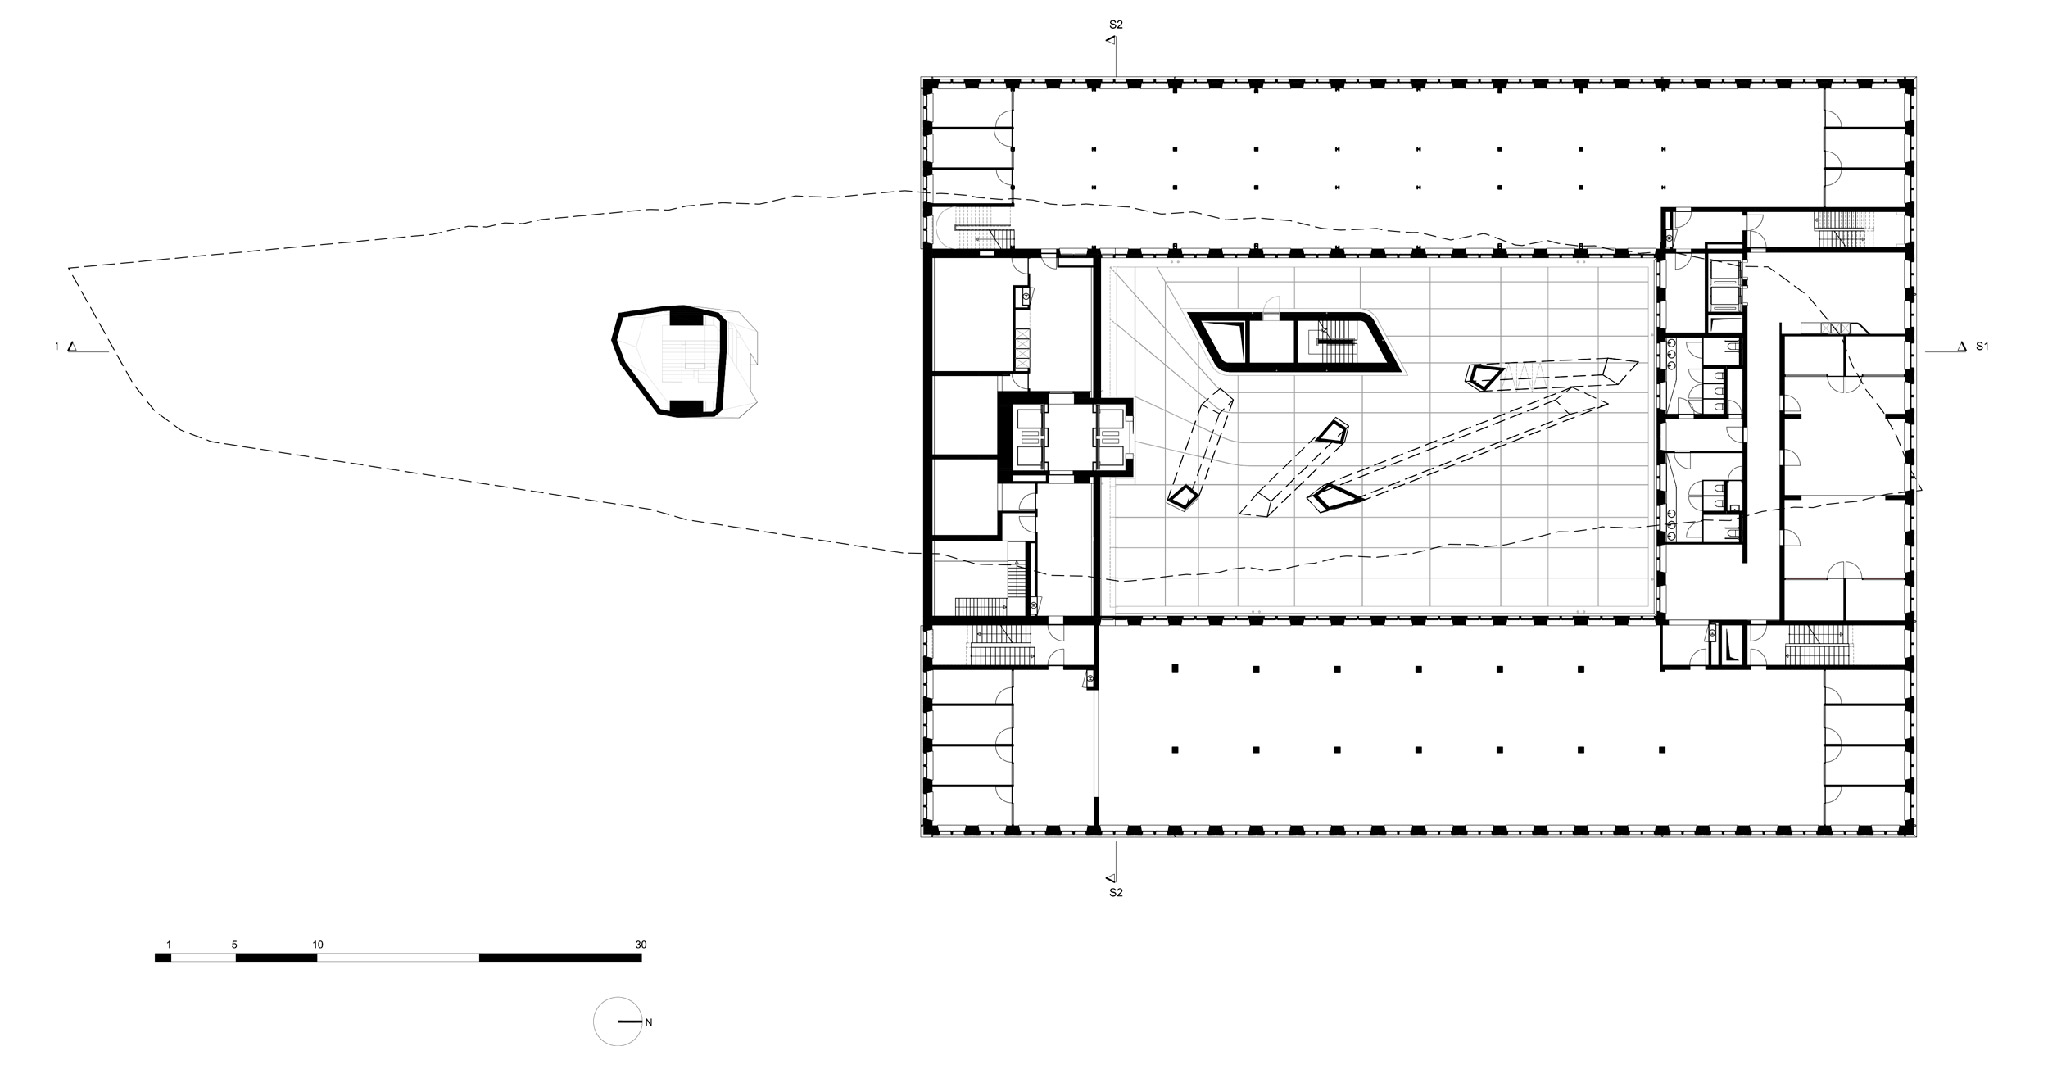 Zaha Hadid Architects completes the Antwerp's New Port House | METALOCUS